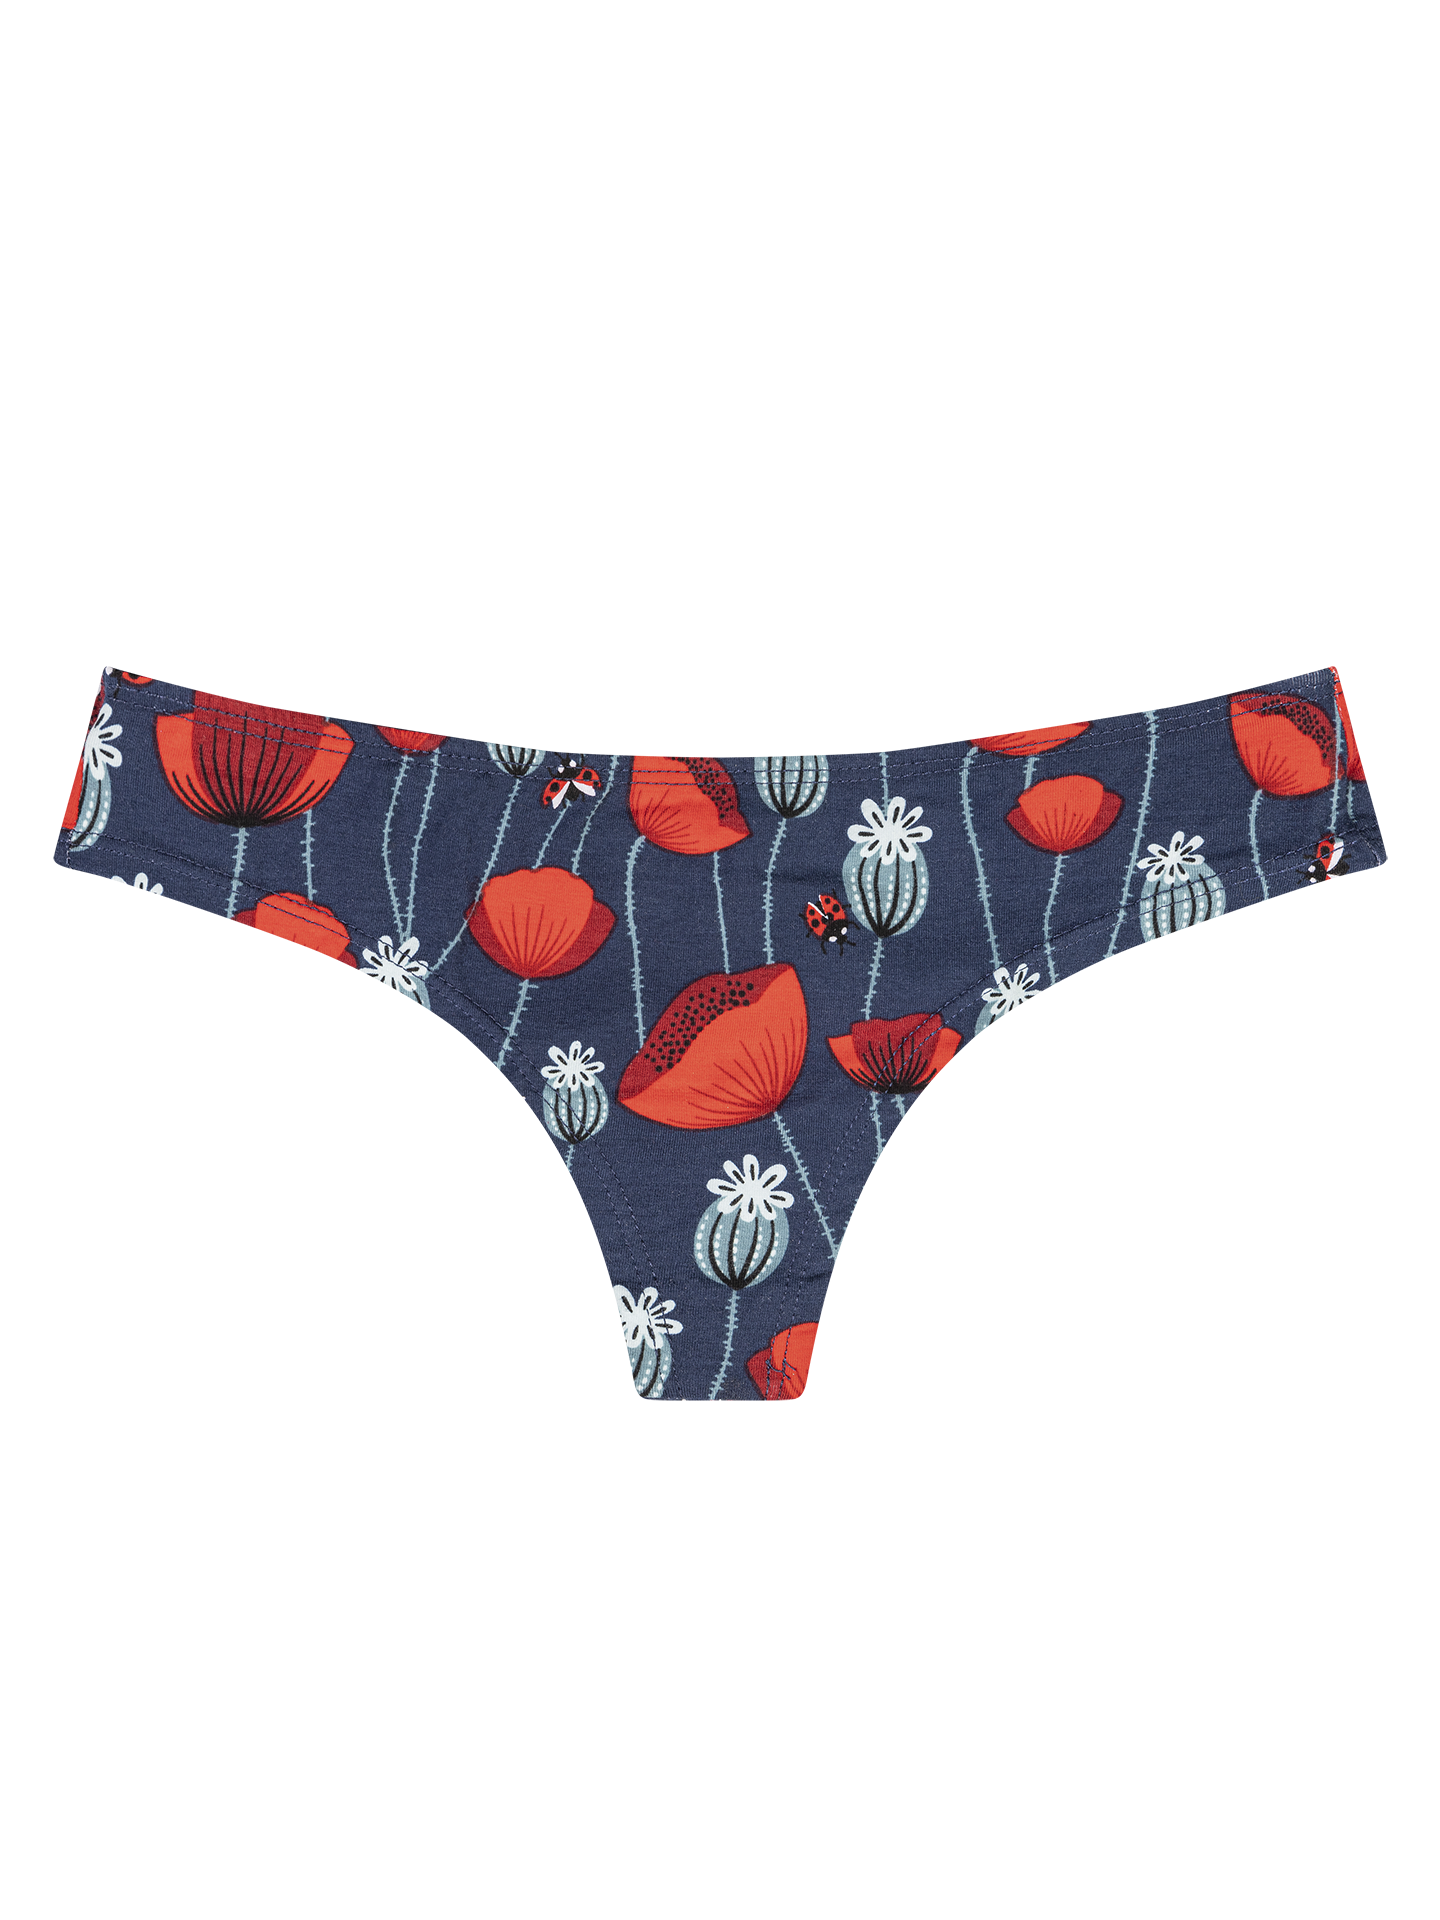 Women's Brazilian Panties Ladybugs & Poppy Flowers